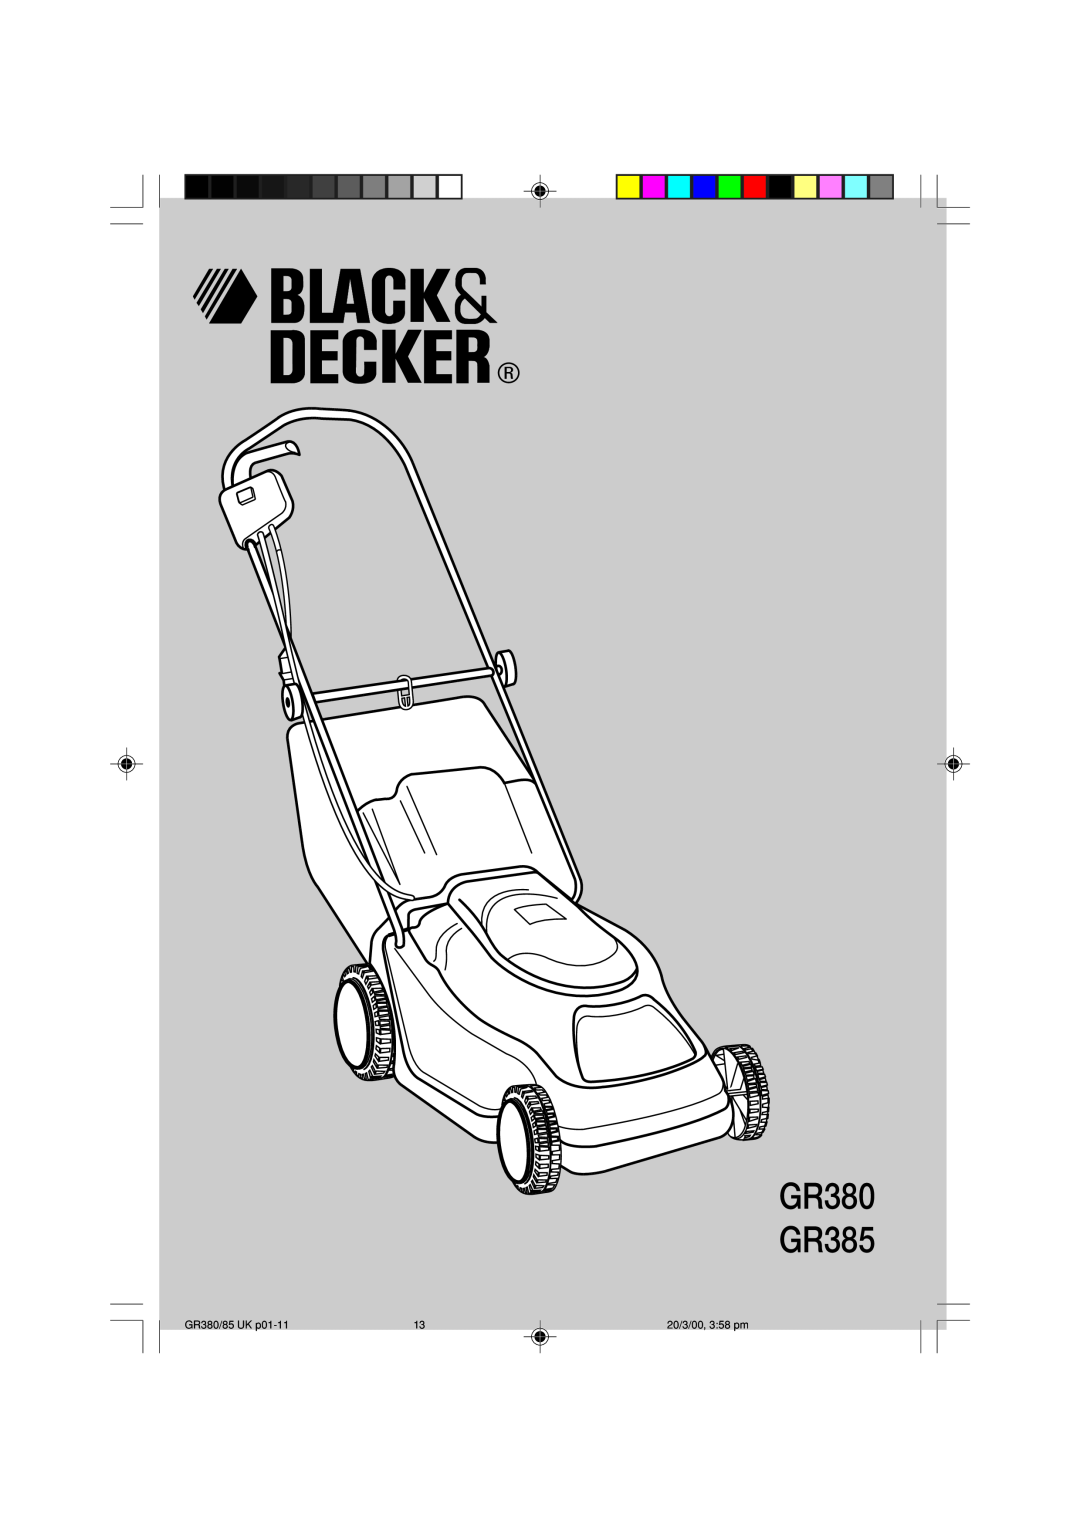 Black & Decker manual GR380 GR385, GR380/85 UK p01-11, 20/3/00, 3 58 pm 